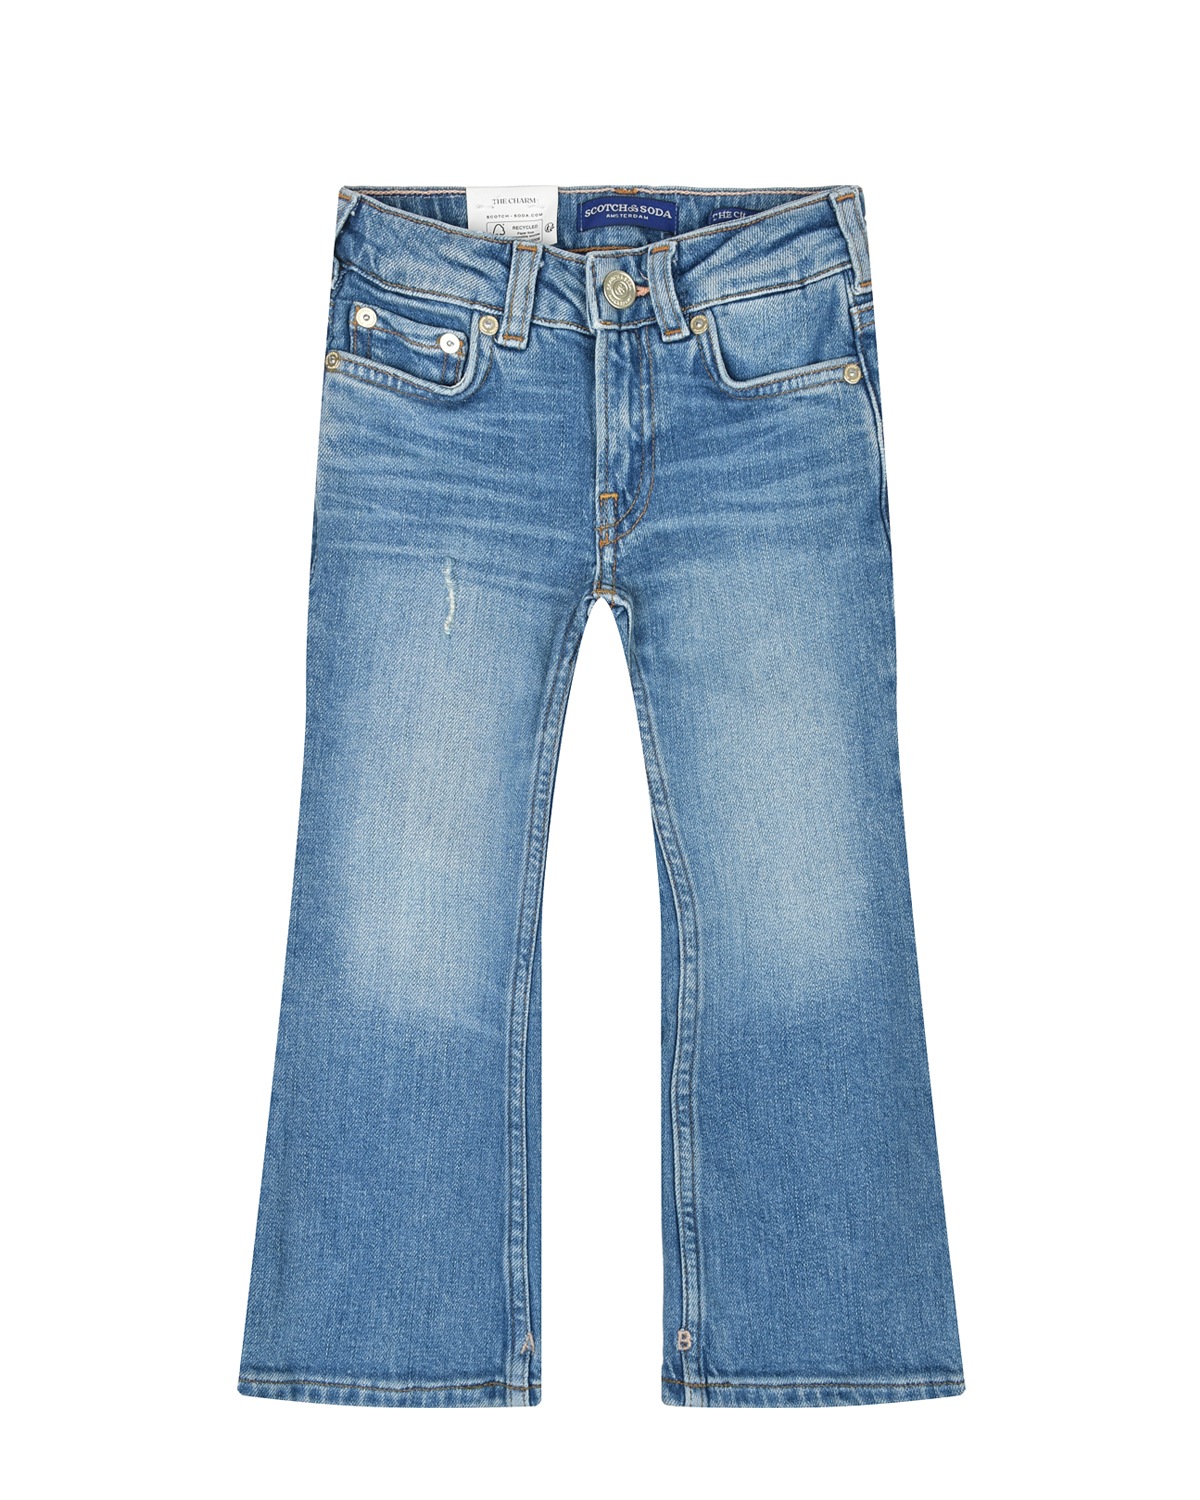 Синие широкие джинсы Scotch&Soda, размер 116, цвет синий - фото 1